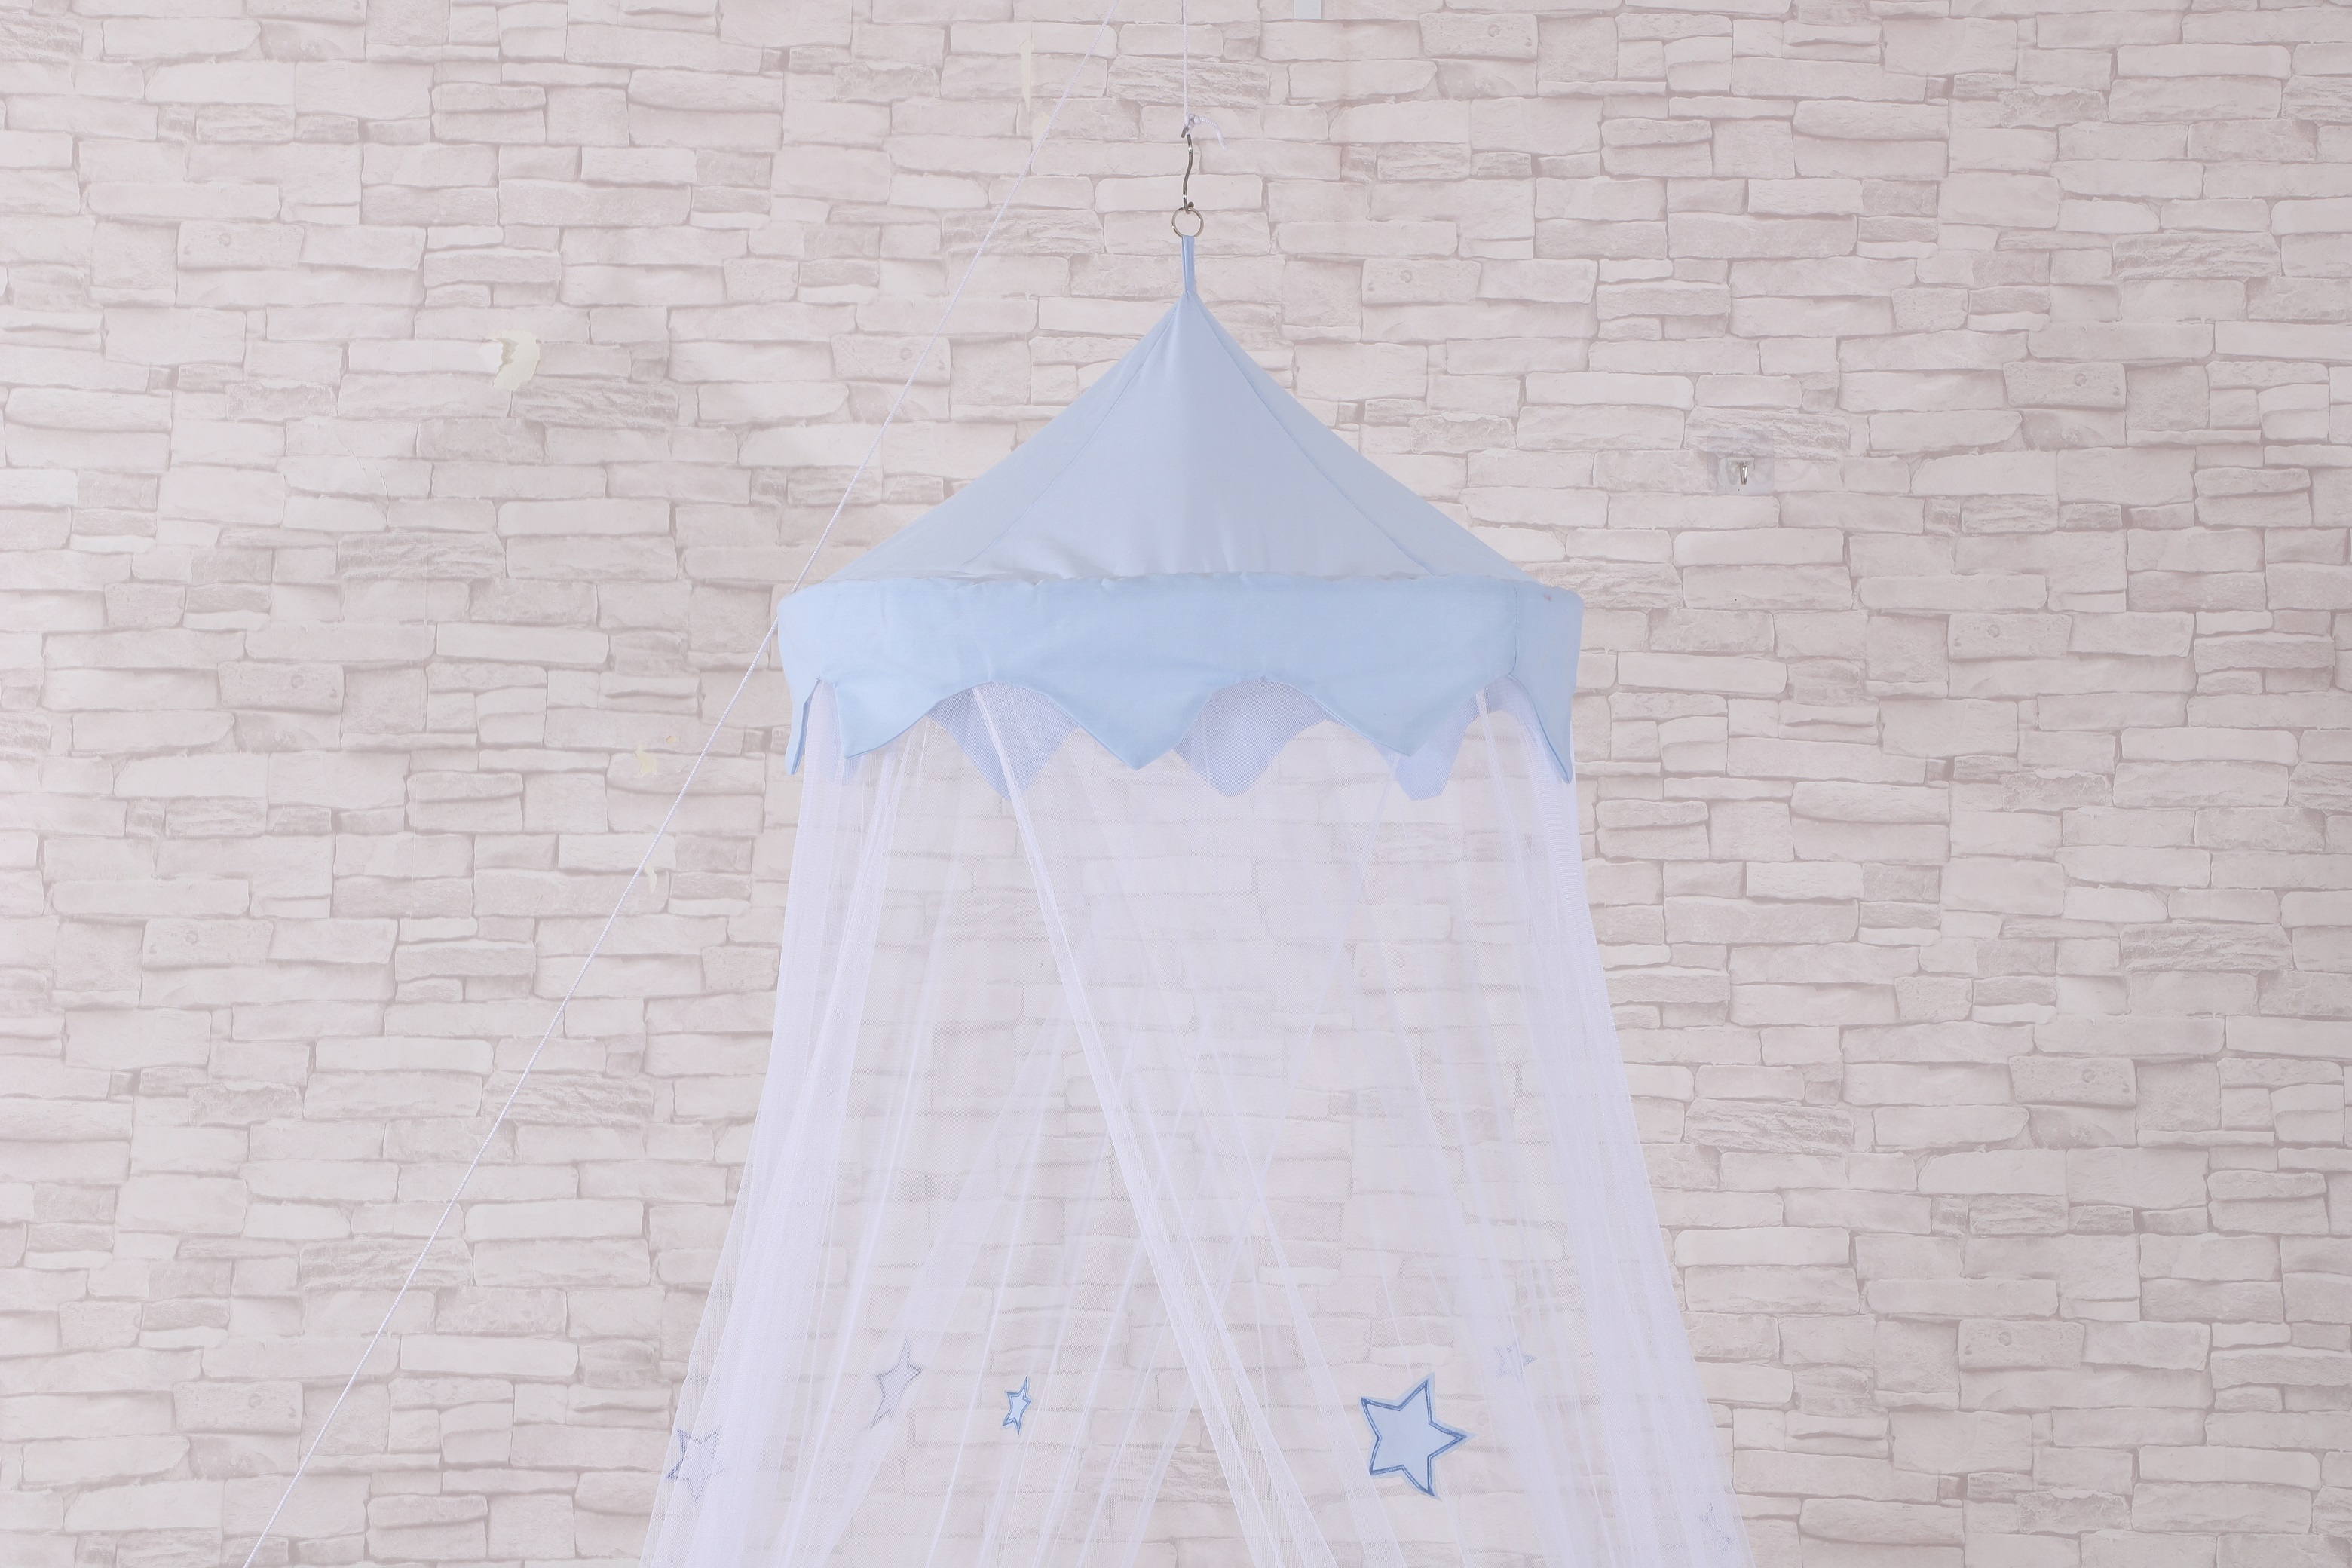 Colgando Princess Mosquito Net Canopy Stars Bed Cortinas Dome Indoor Game House